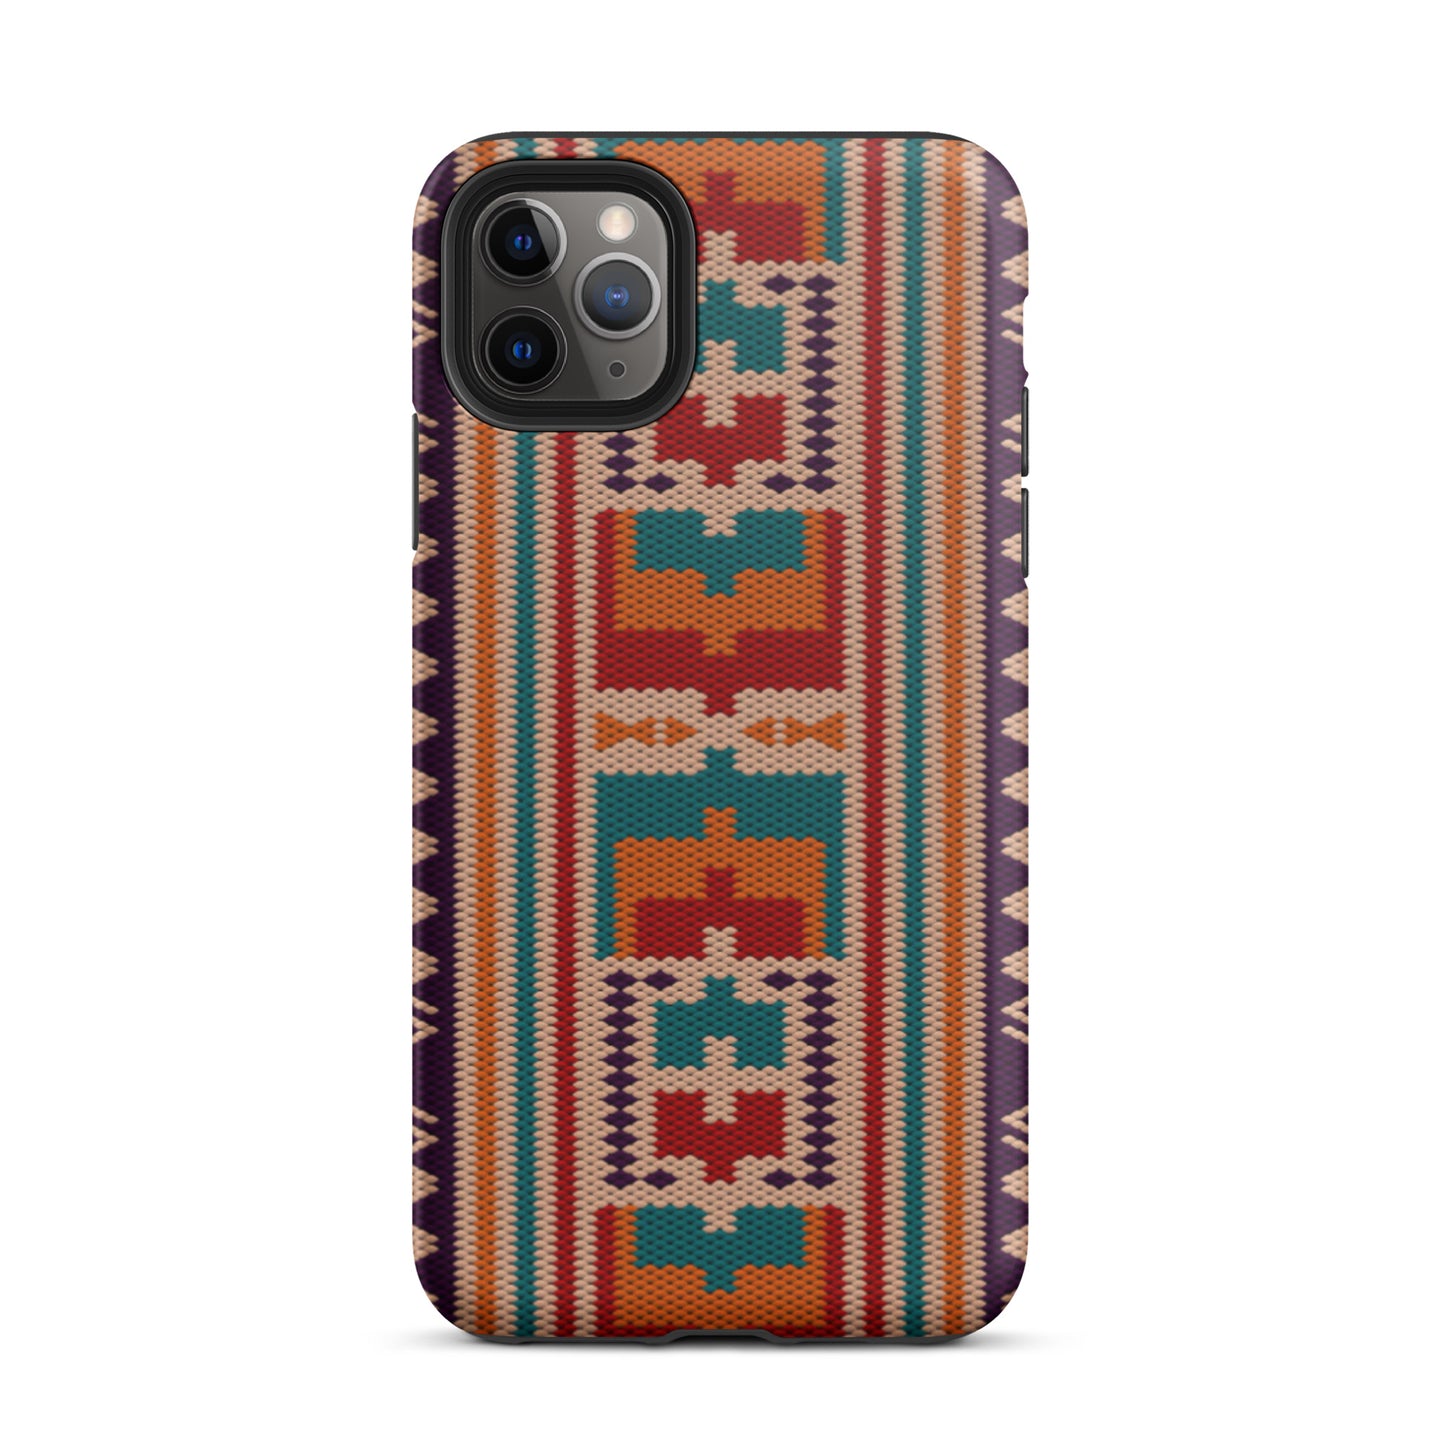 Navajo Tough iPhone 11 Pro Max case